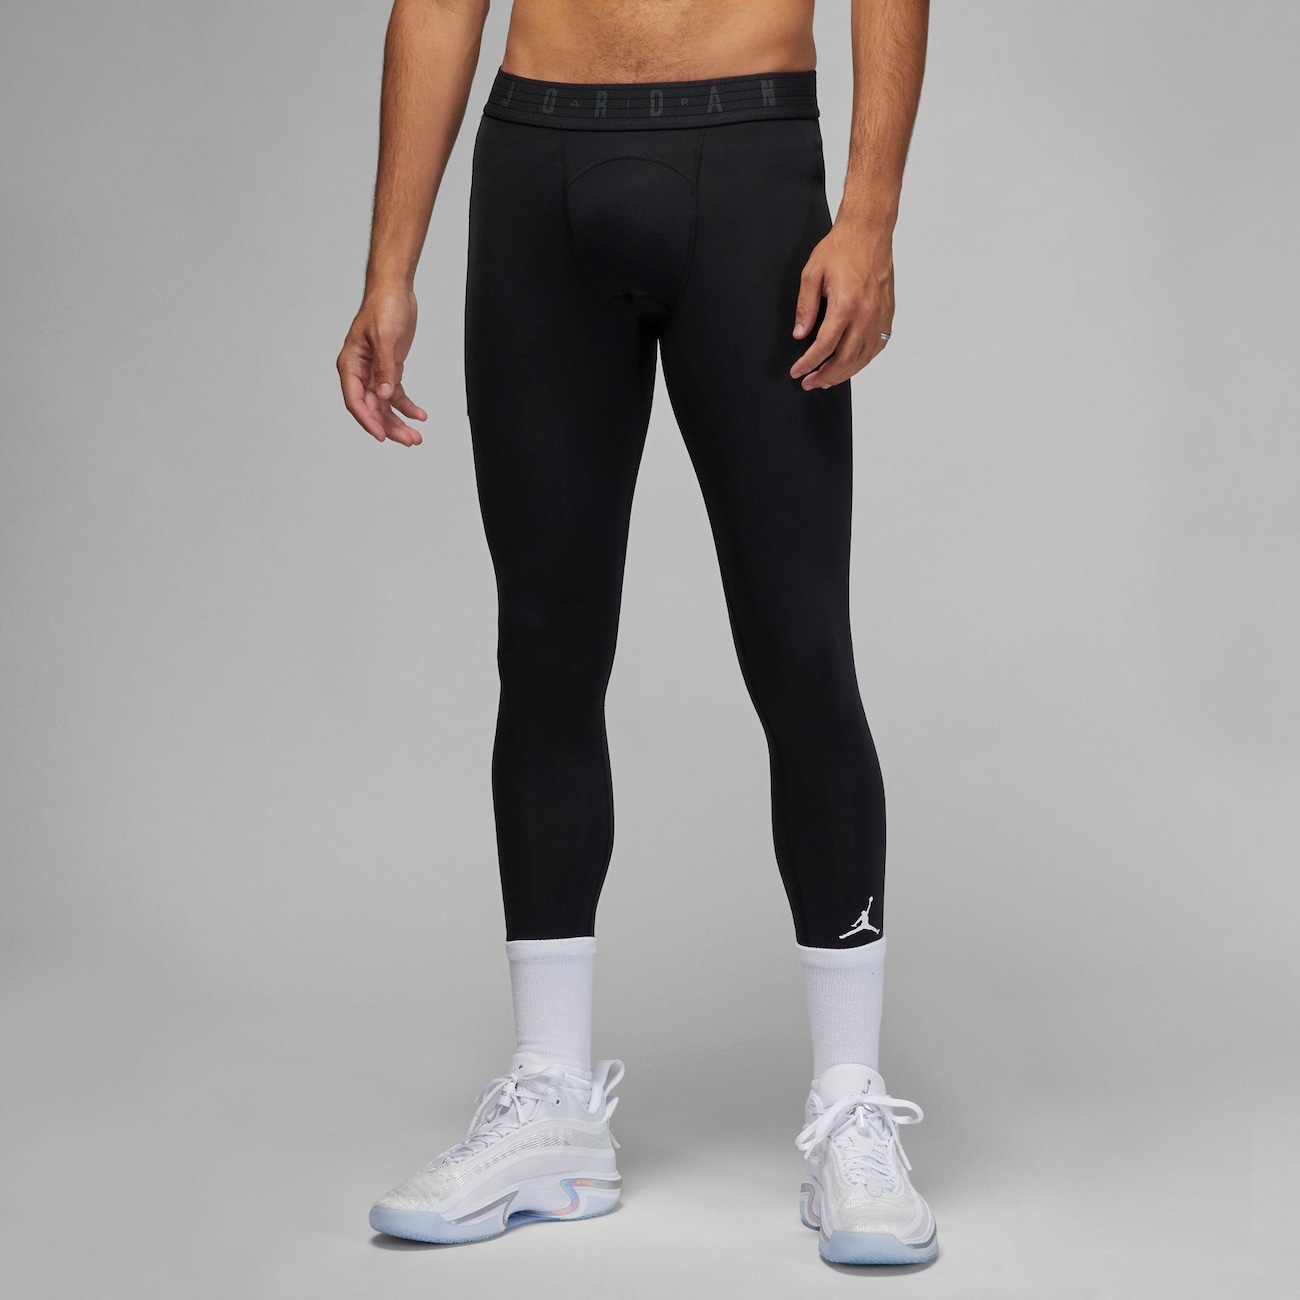 Calça Legging Masculina Nike Dri-Fit Challenger Tight em Promoção